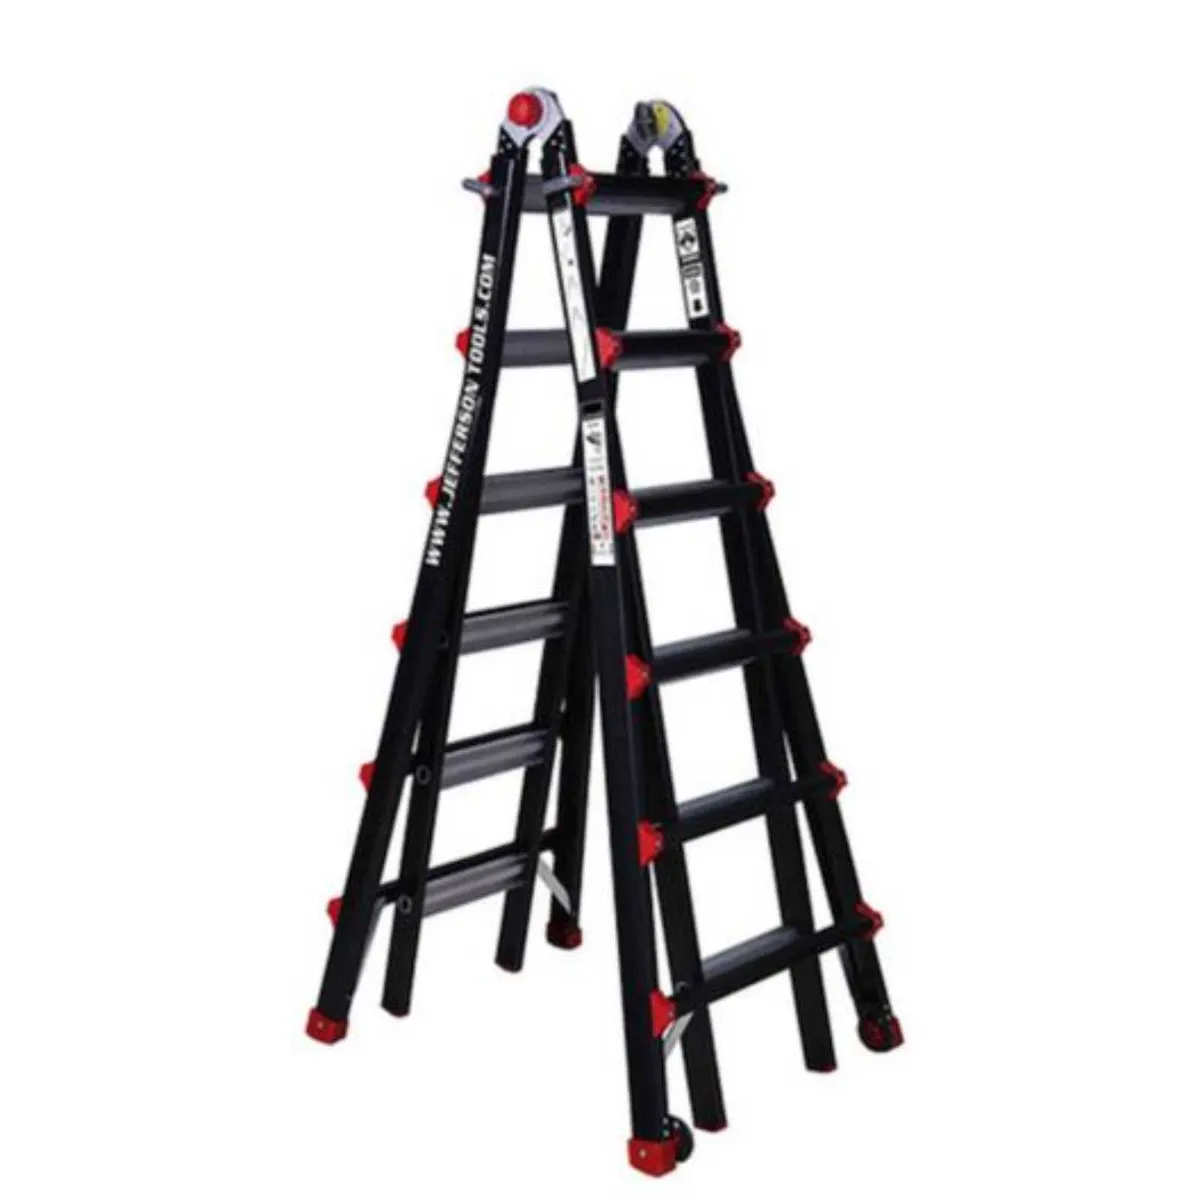 Jefferson professional multi purpose ladders